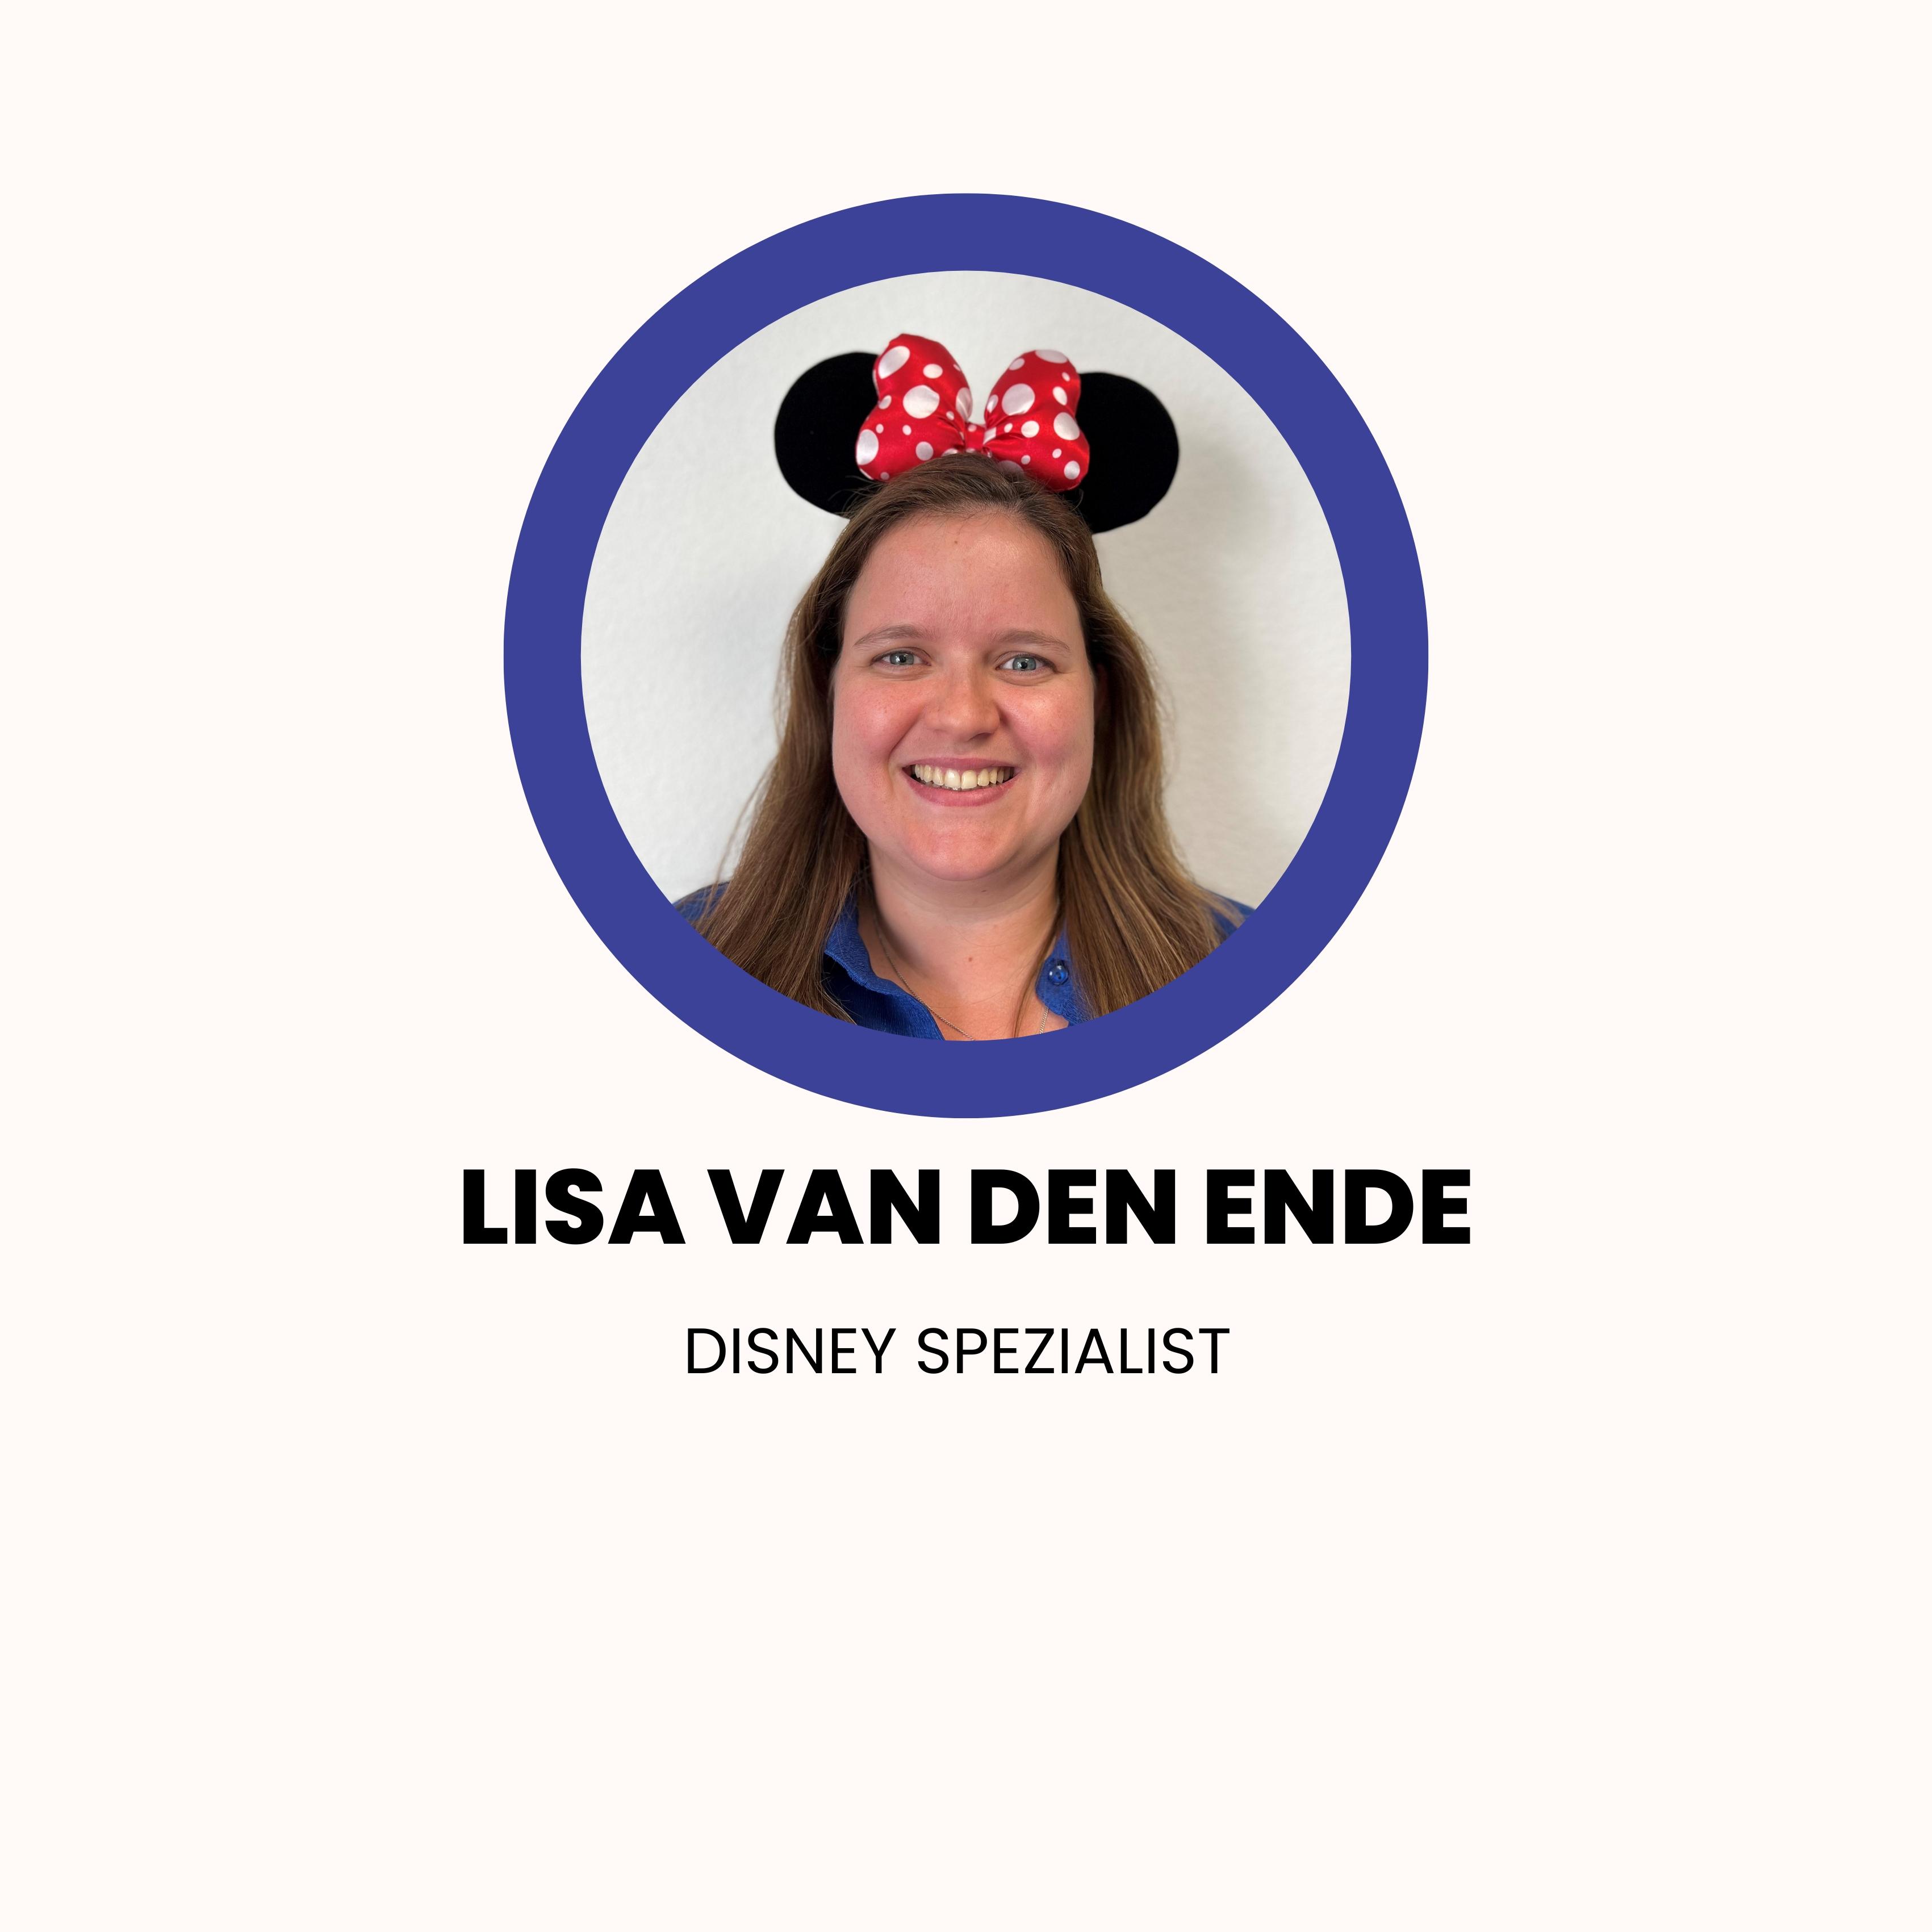 Disney specialist Lisa